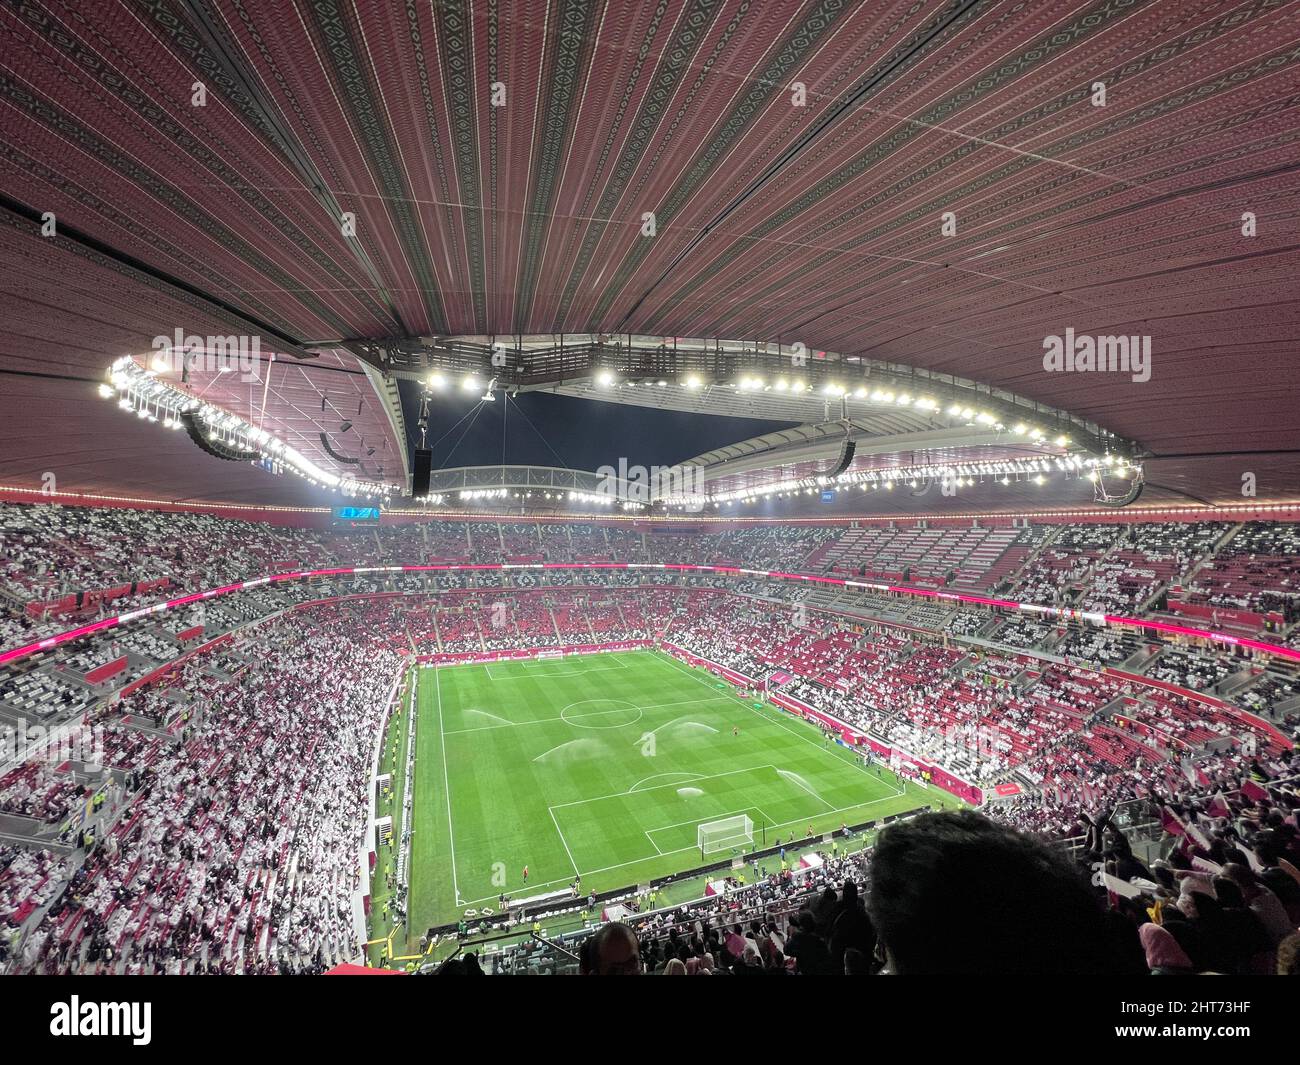 Qatar football stadium hi-res stock photography and images - Alamy